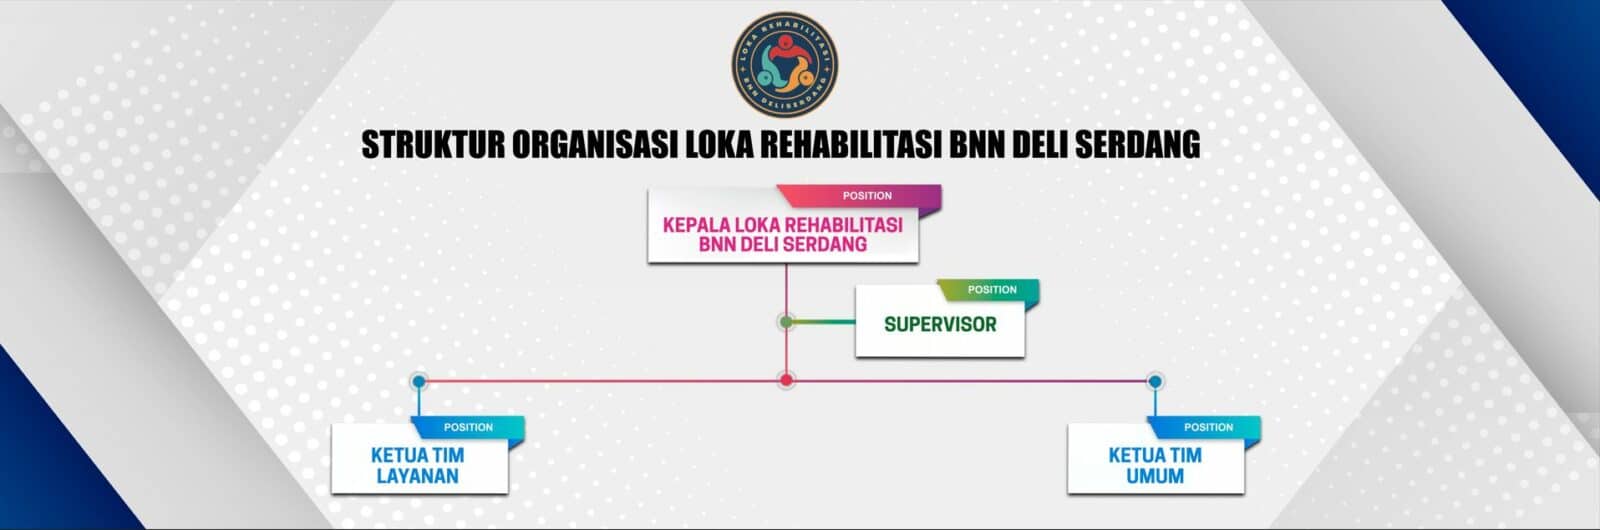 Struktur Organisasi Loka Rehabilitasi BNN Deli Serdang